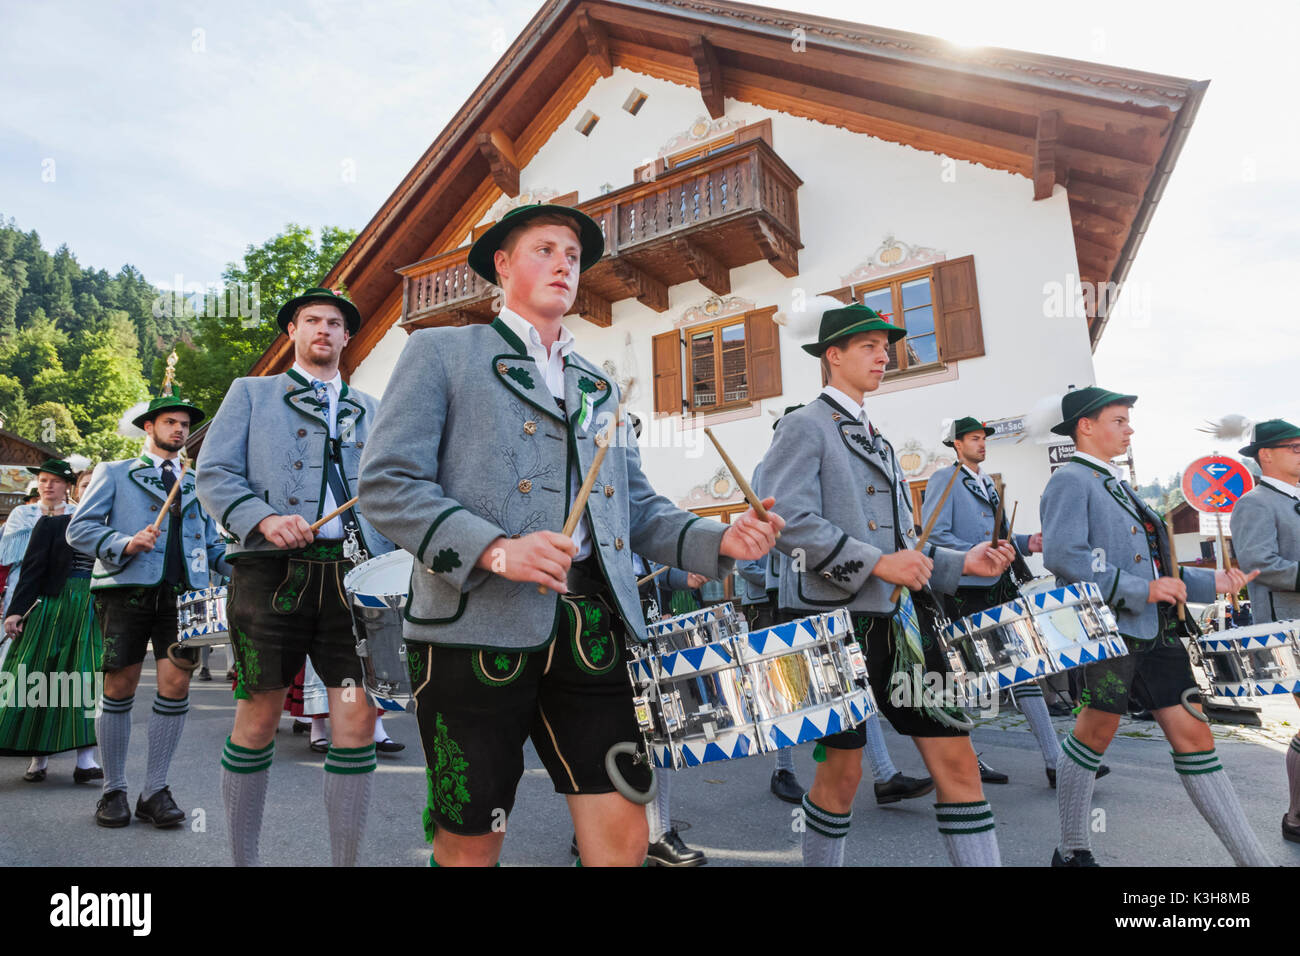 Germany, Bavaria, Garmisch-Partenkirchen, Bavarian Festival, Marching Band in Traditional Costume Stock Photo